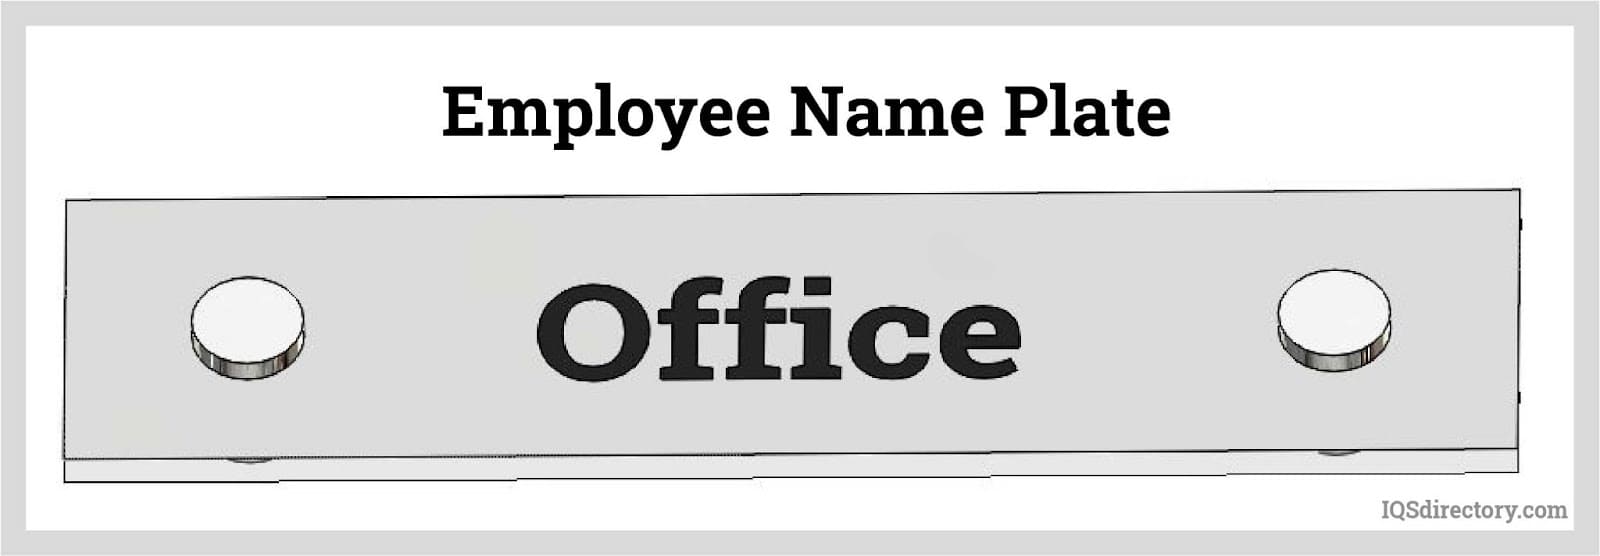 Employee Name Plate